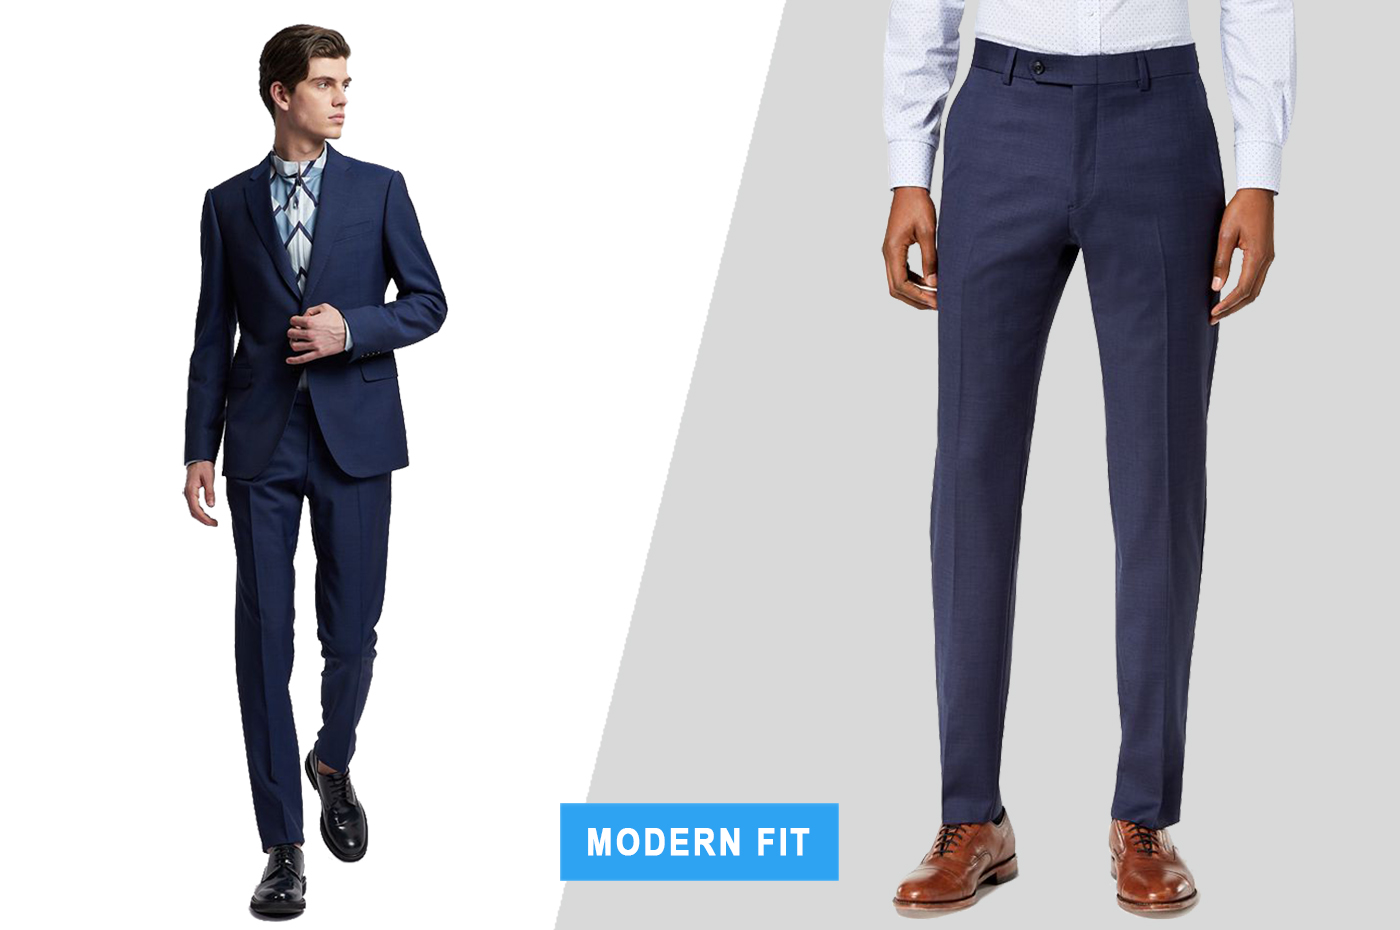 modern fit dress pants with suit